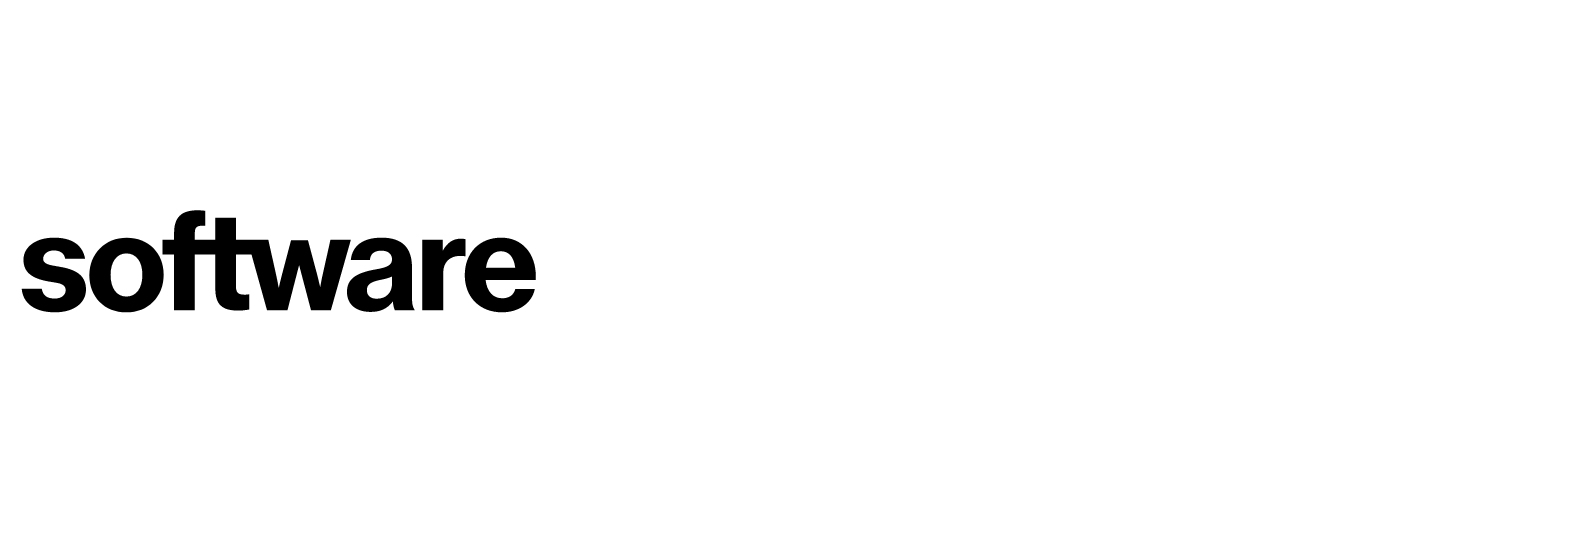 bvtech-logo.png